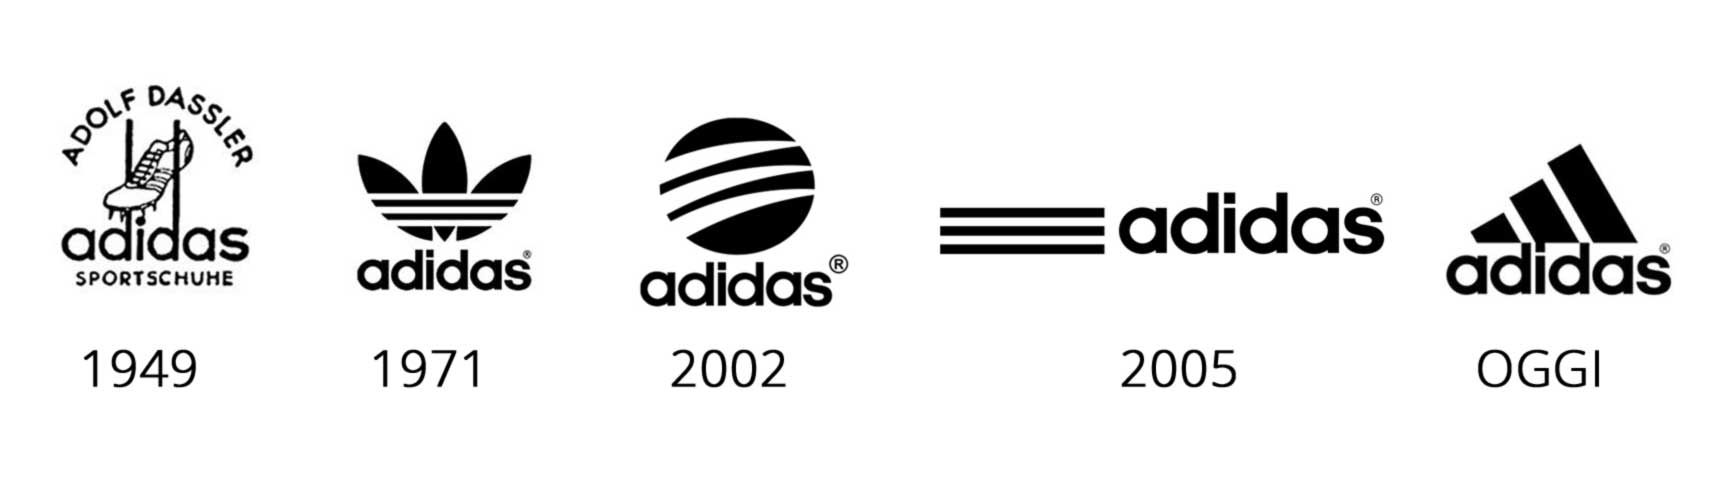 History Behind Adidas Logo - Design Talk